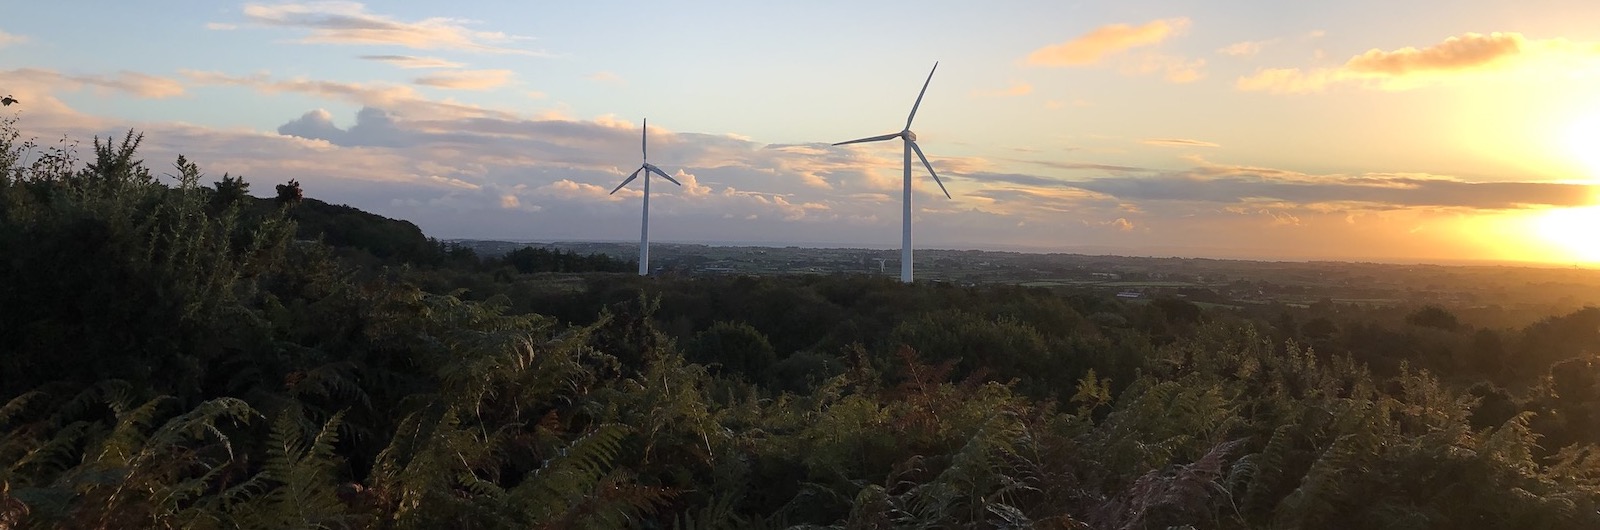 Wind turbines at sunrise, panoramic